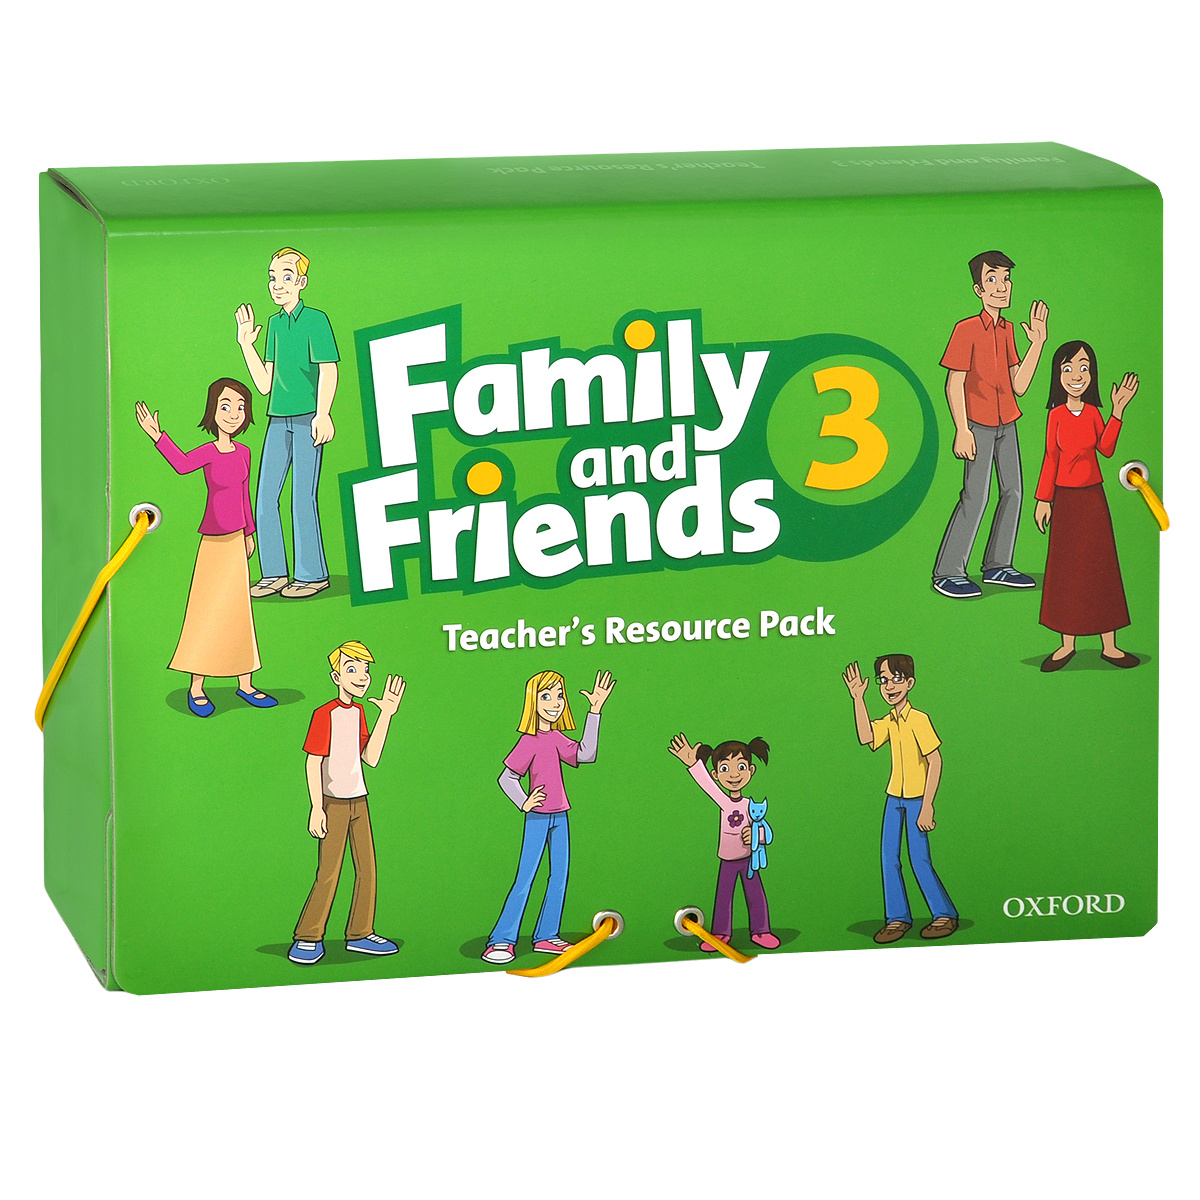 Friends 3 test book. Английский Family and friends 3. Oxford Family and friends 3. Фэмили френдс. Oxford Family and friends.